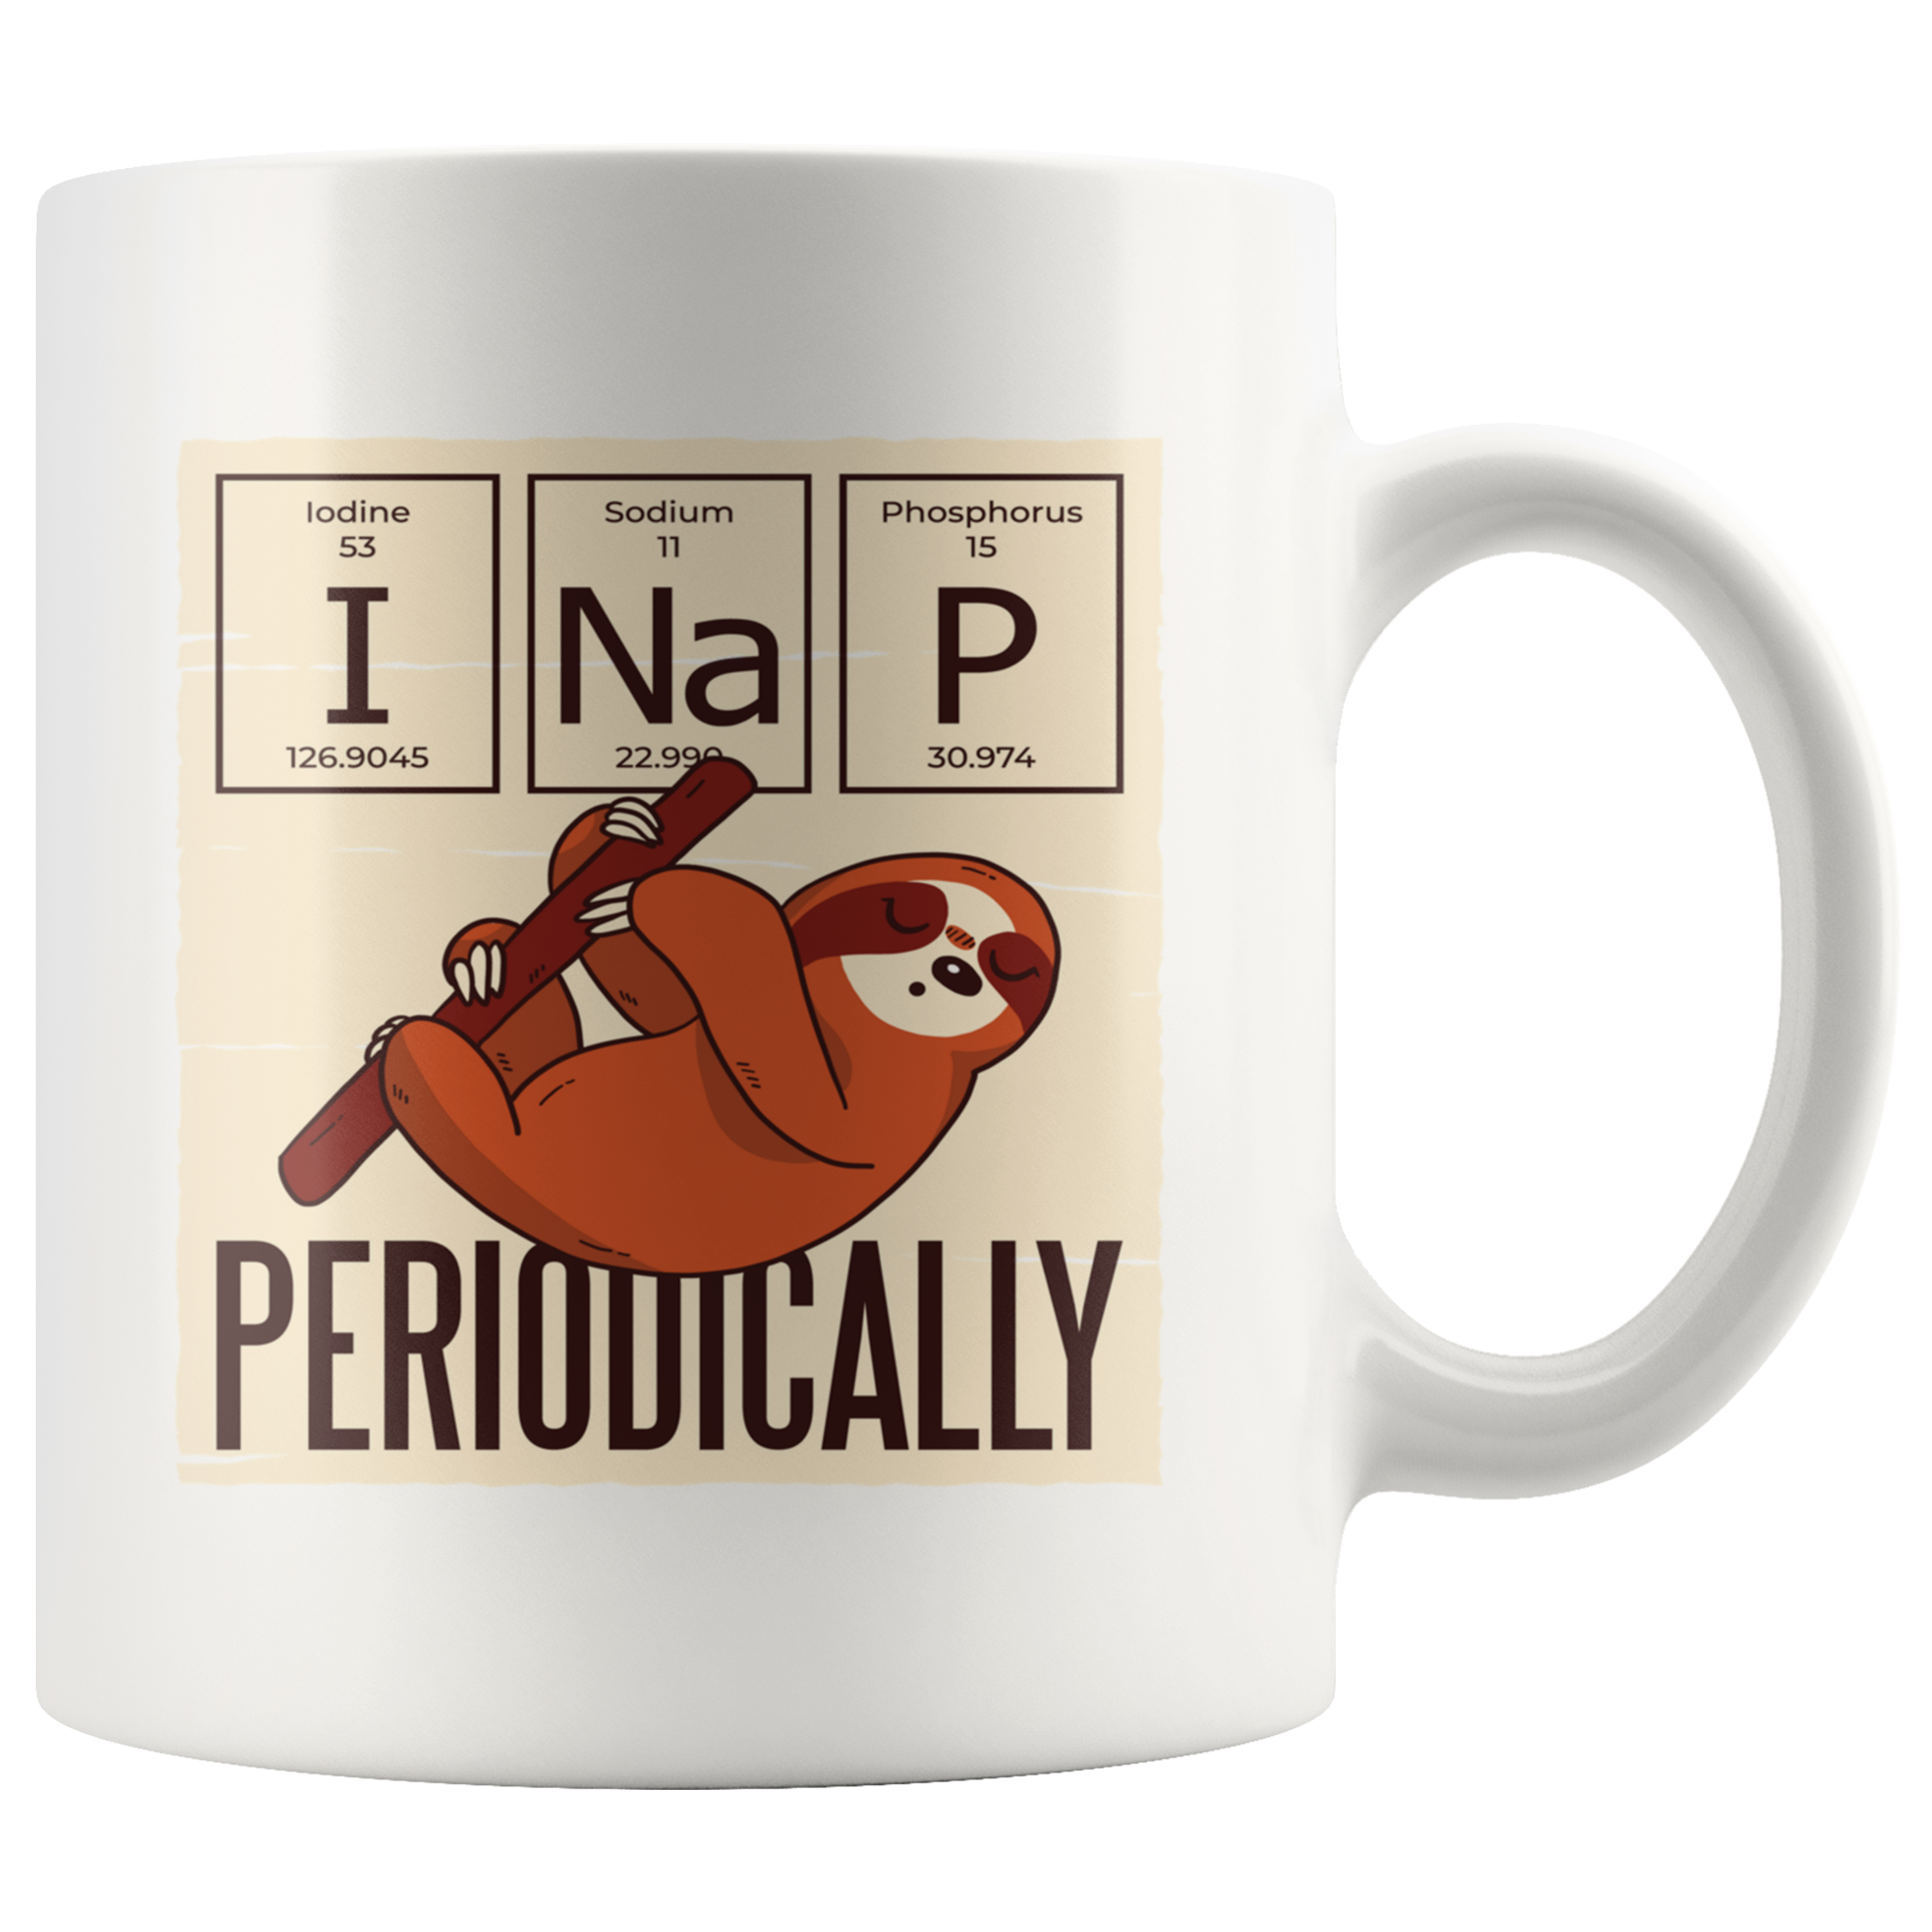 Periodically Mug